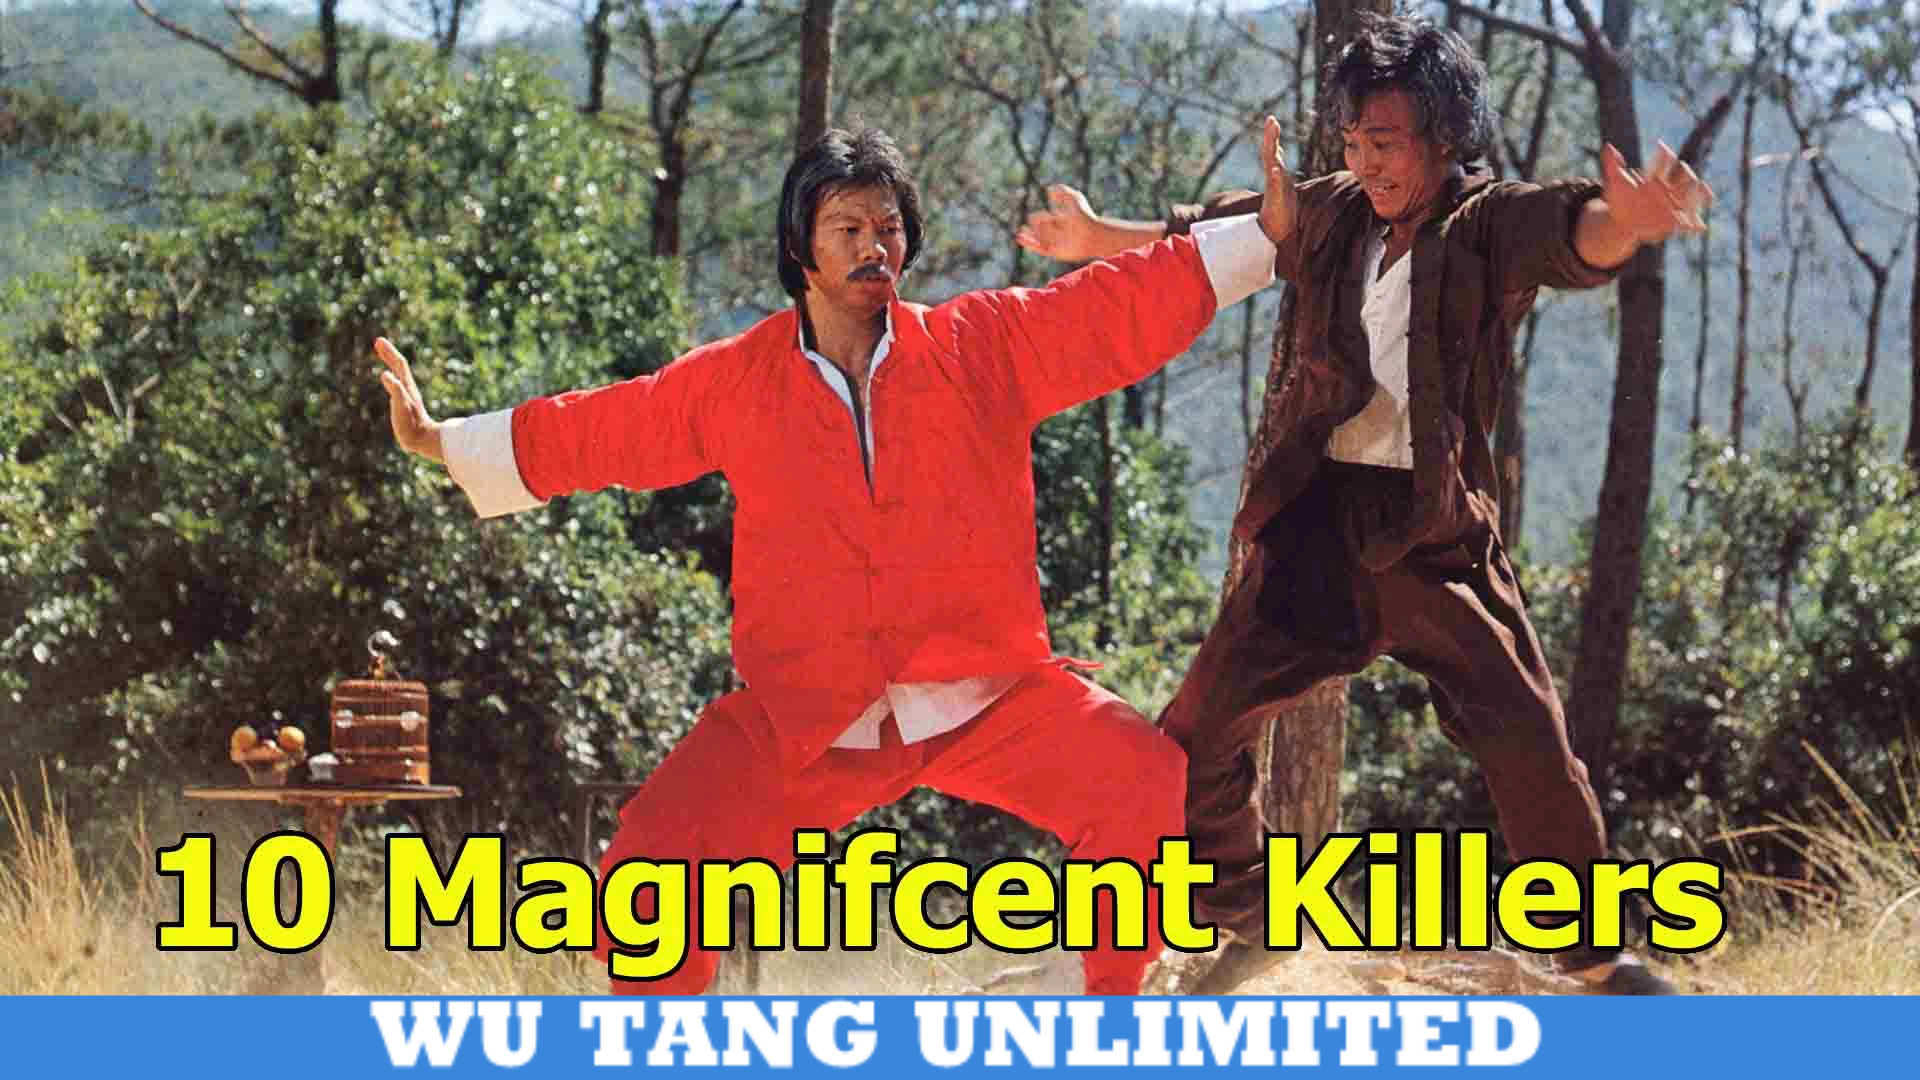 10 Magnificent Killers